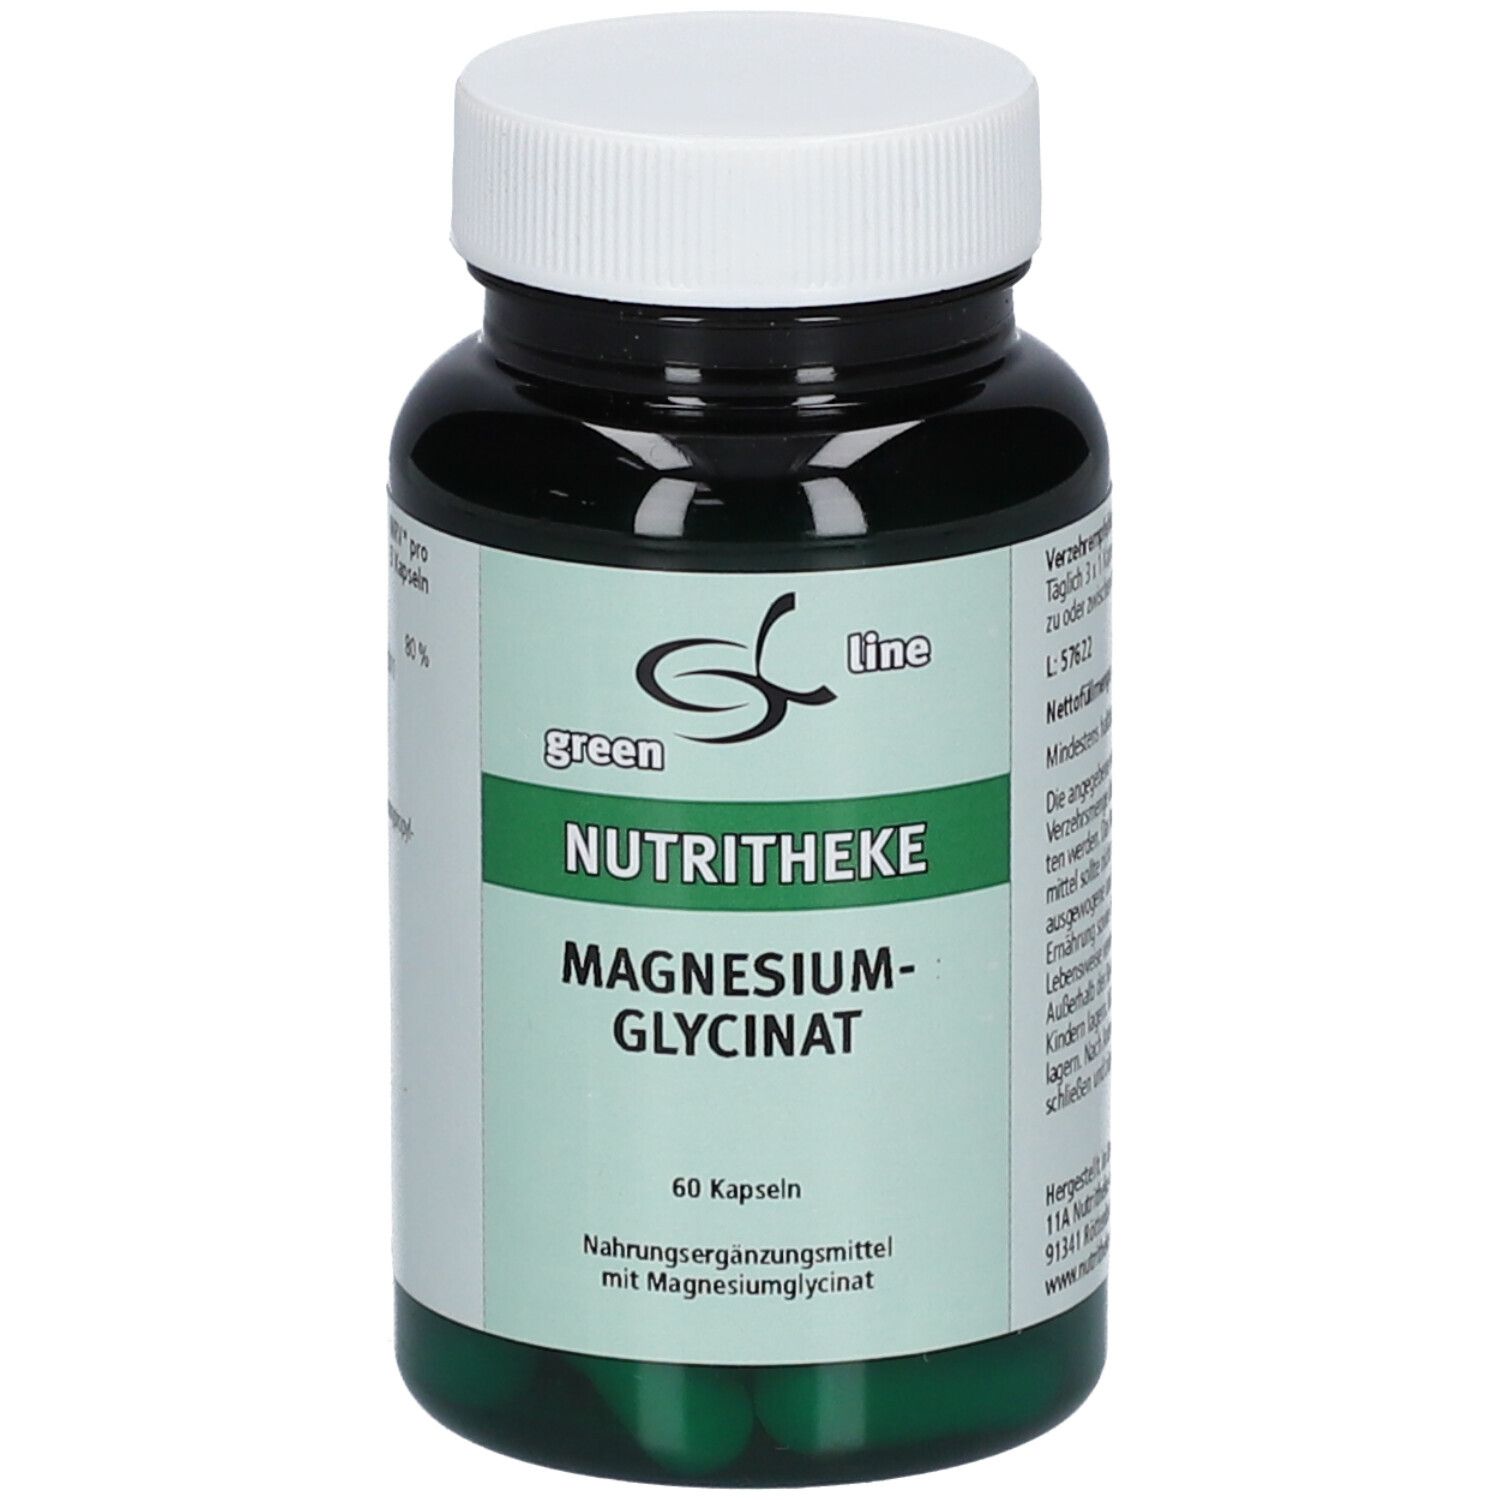 green line Magnesiumglycinat